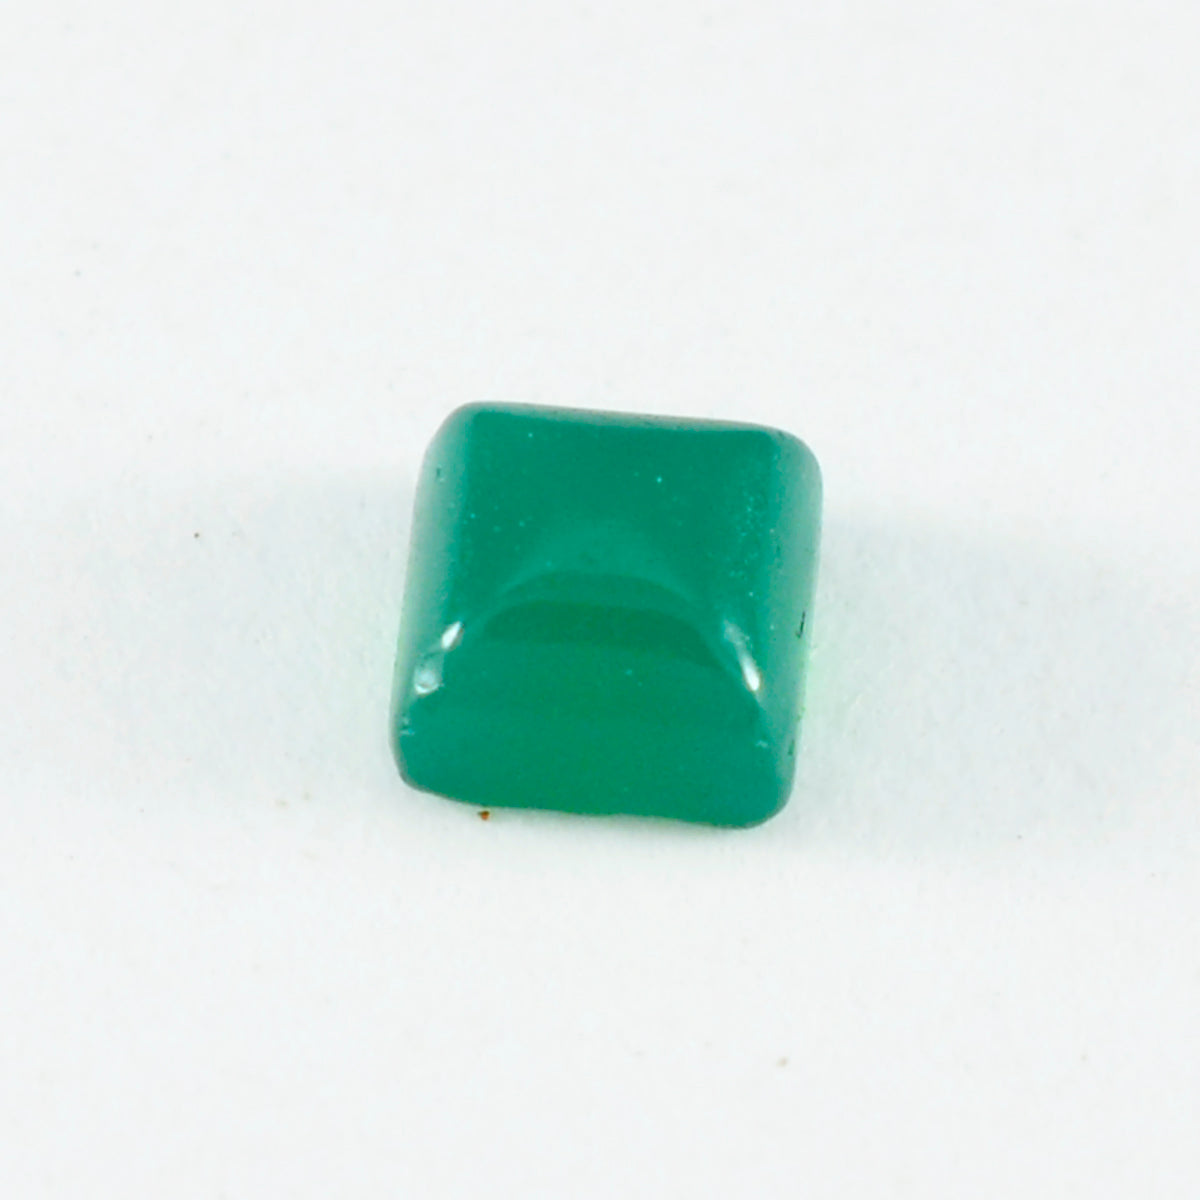 Riyogems 1PC groene onyx cabochon 11x11 mm vierkante vorm knappe kwaliteitssteen